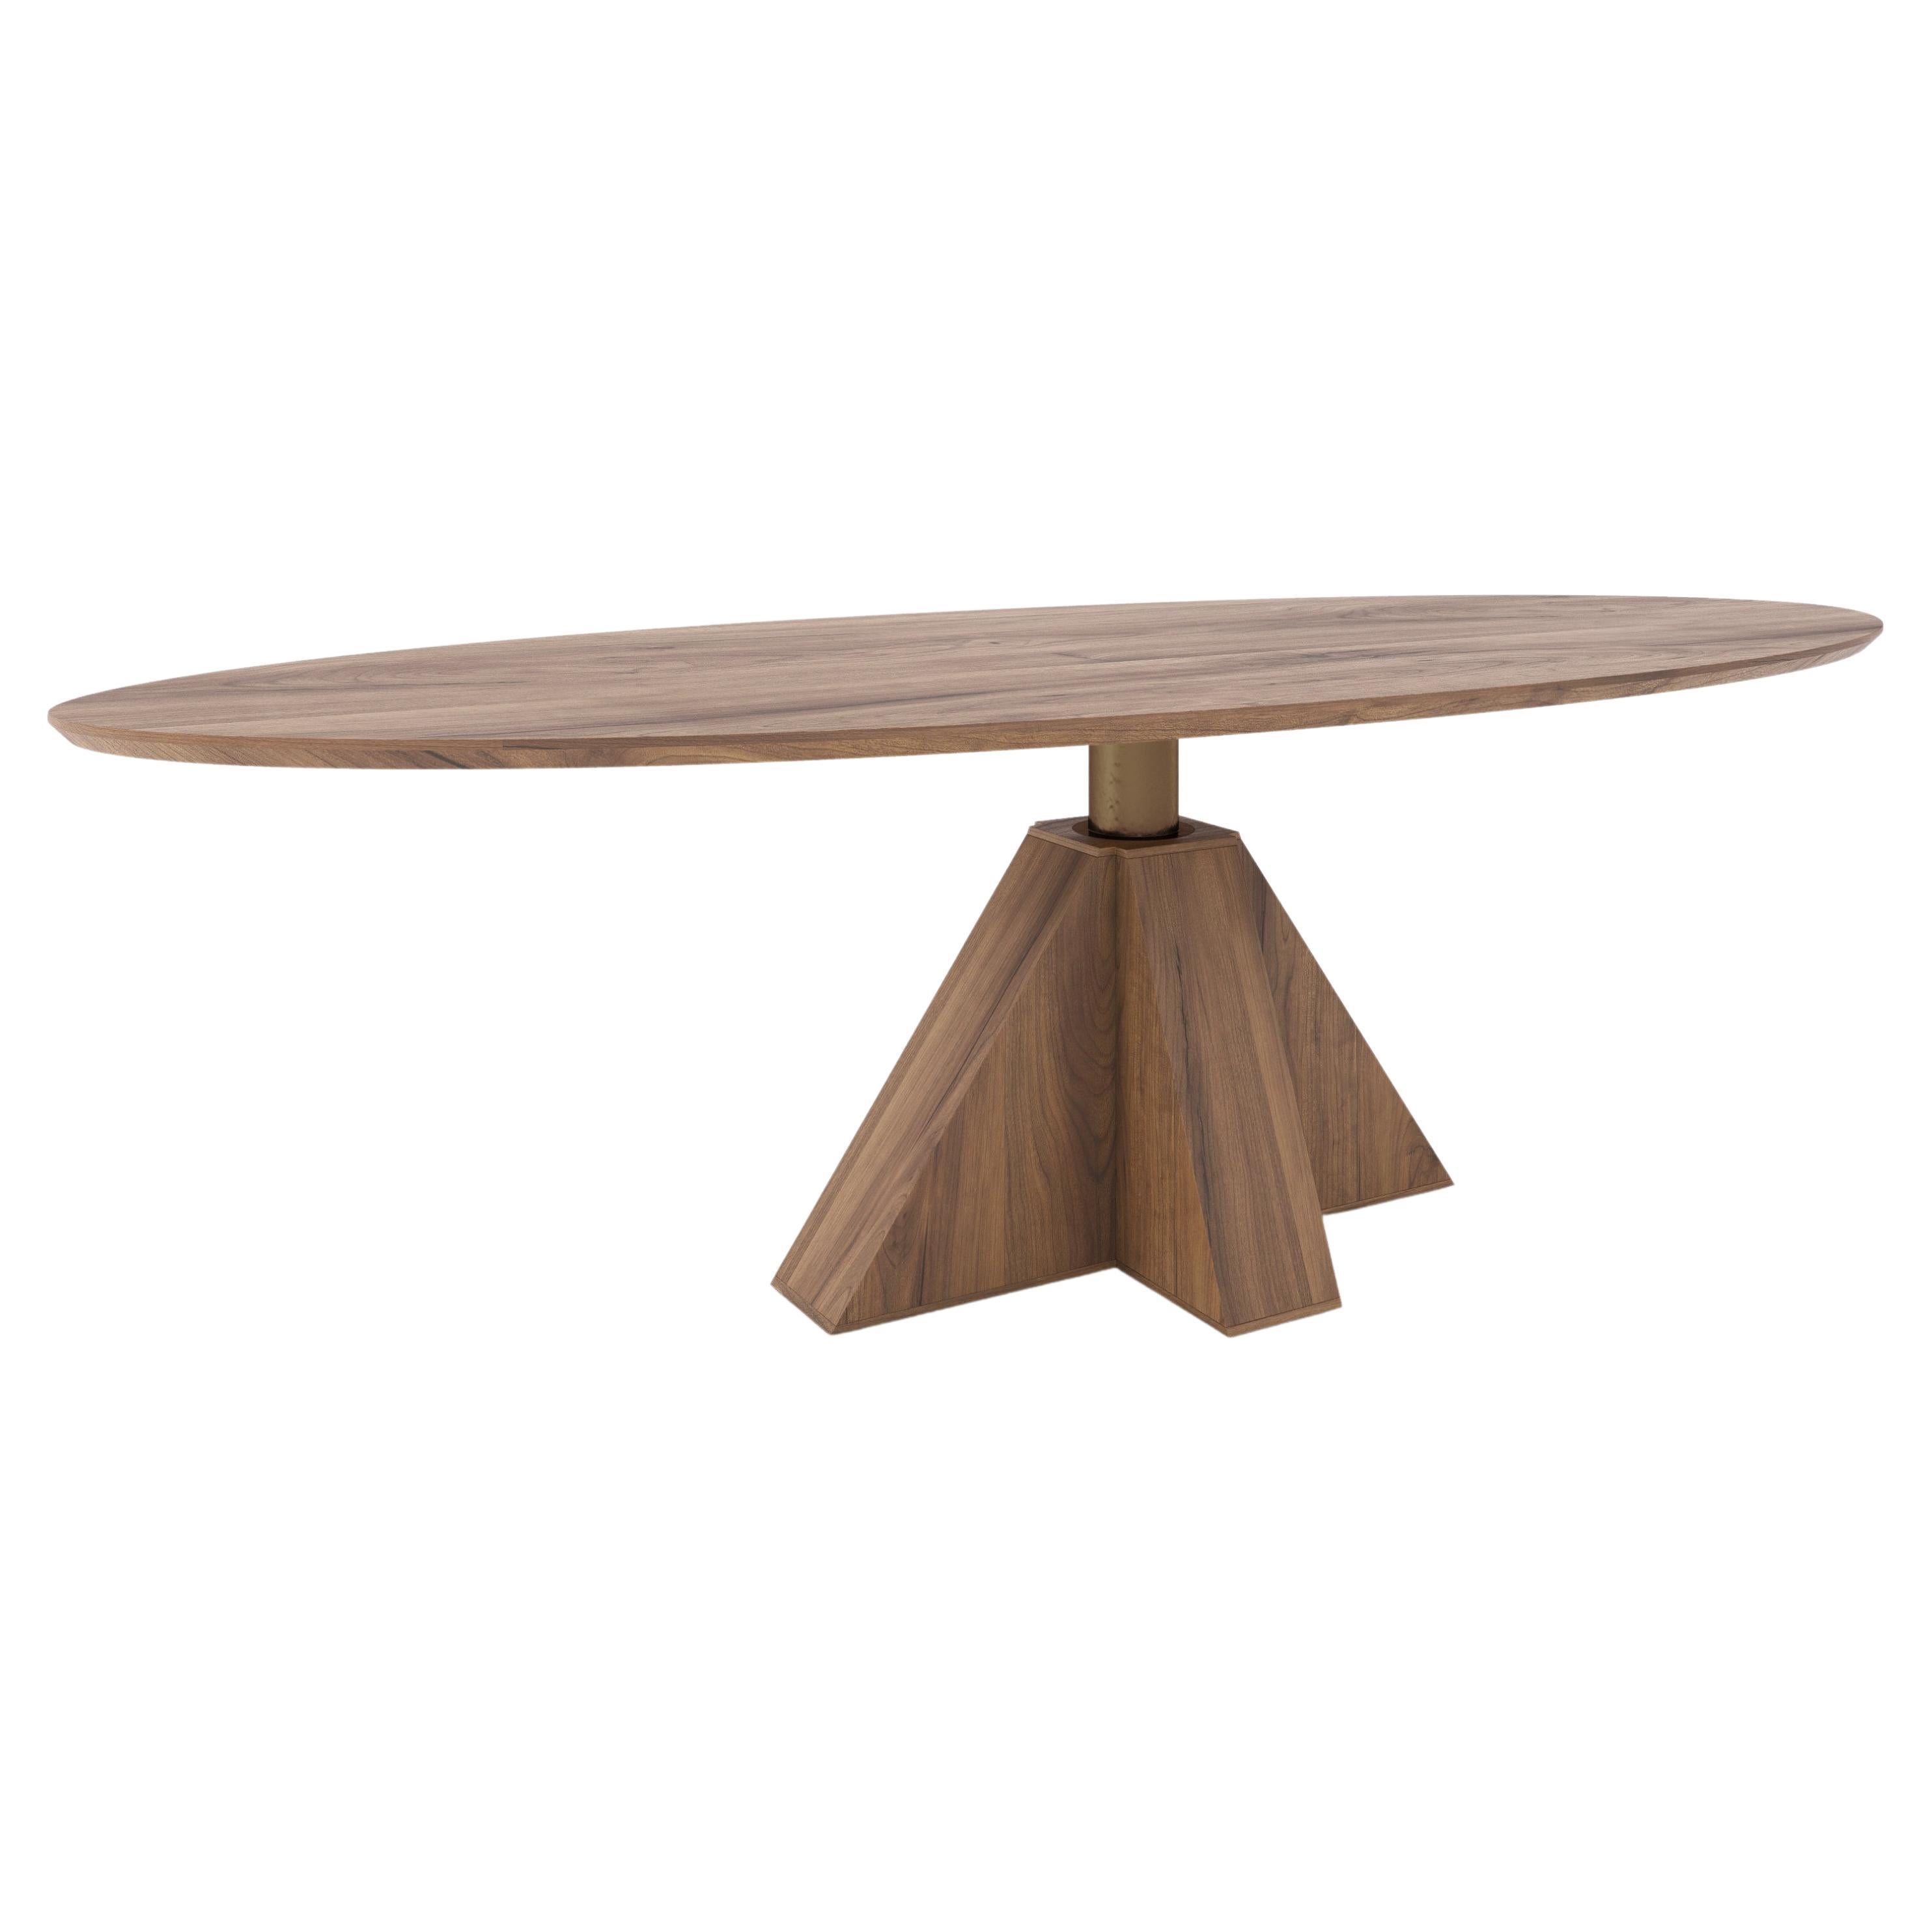 M-Oval Table by Daniel Boddam, 70" x 41", Walnut